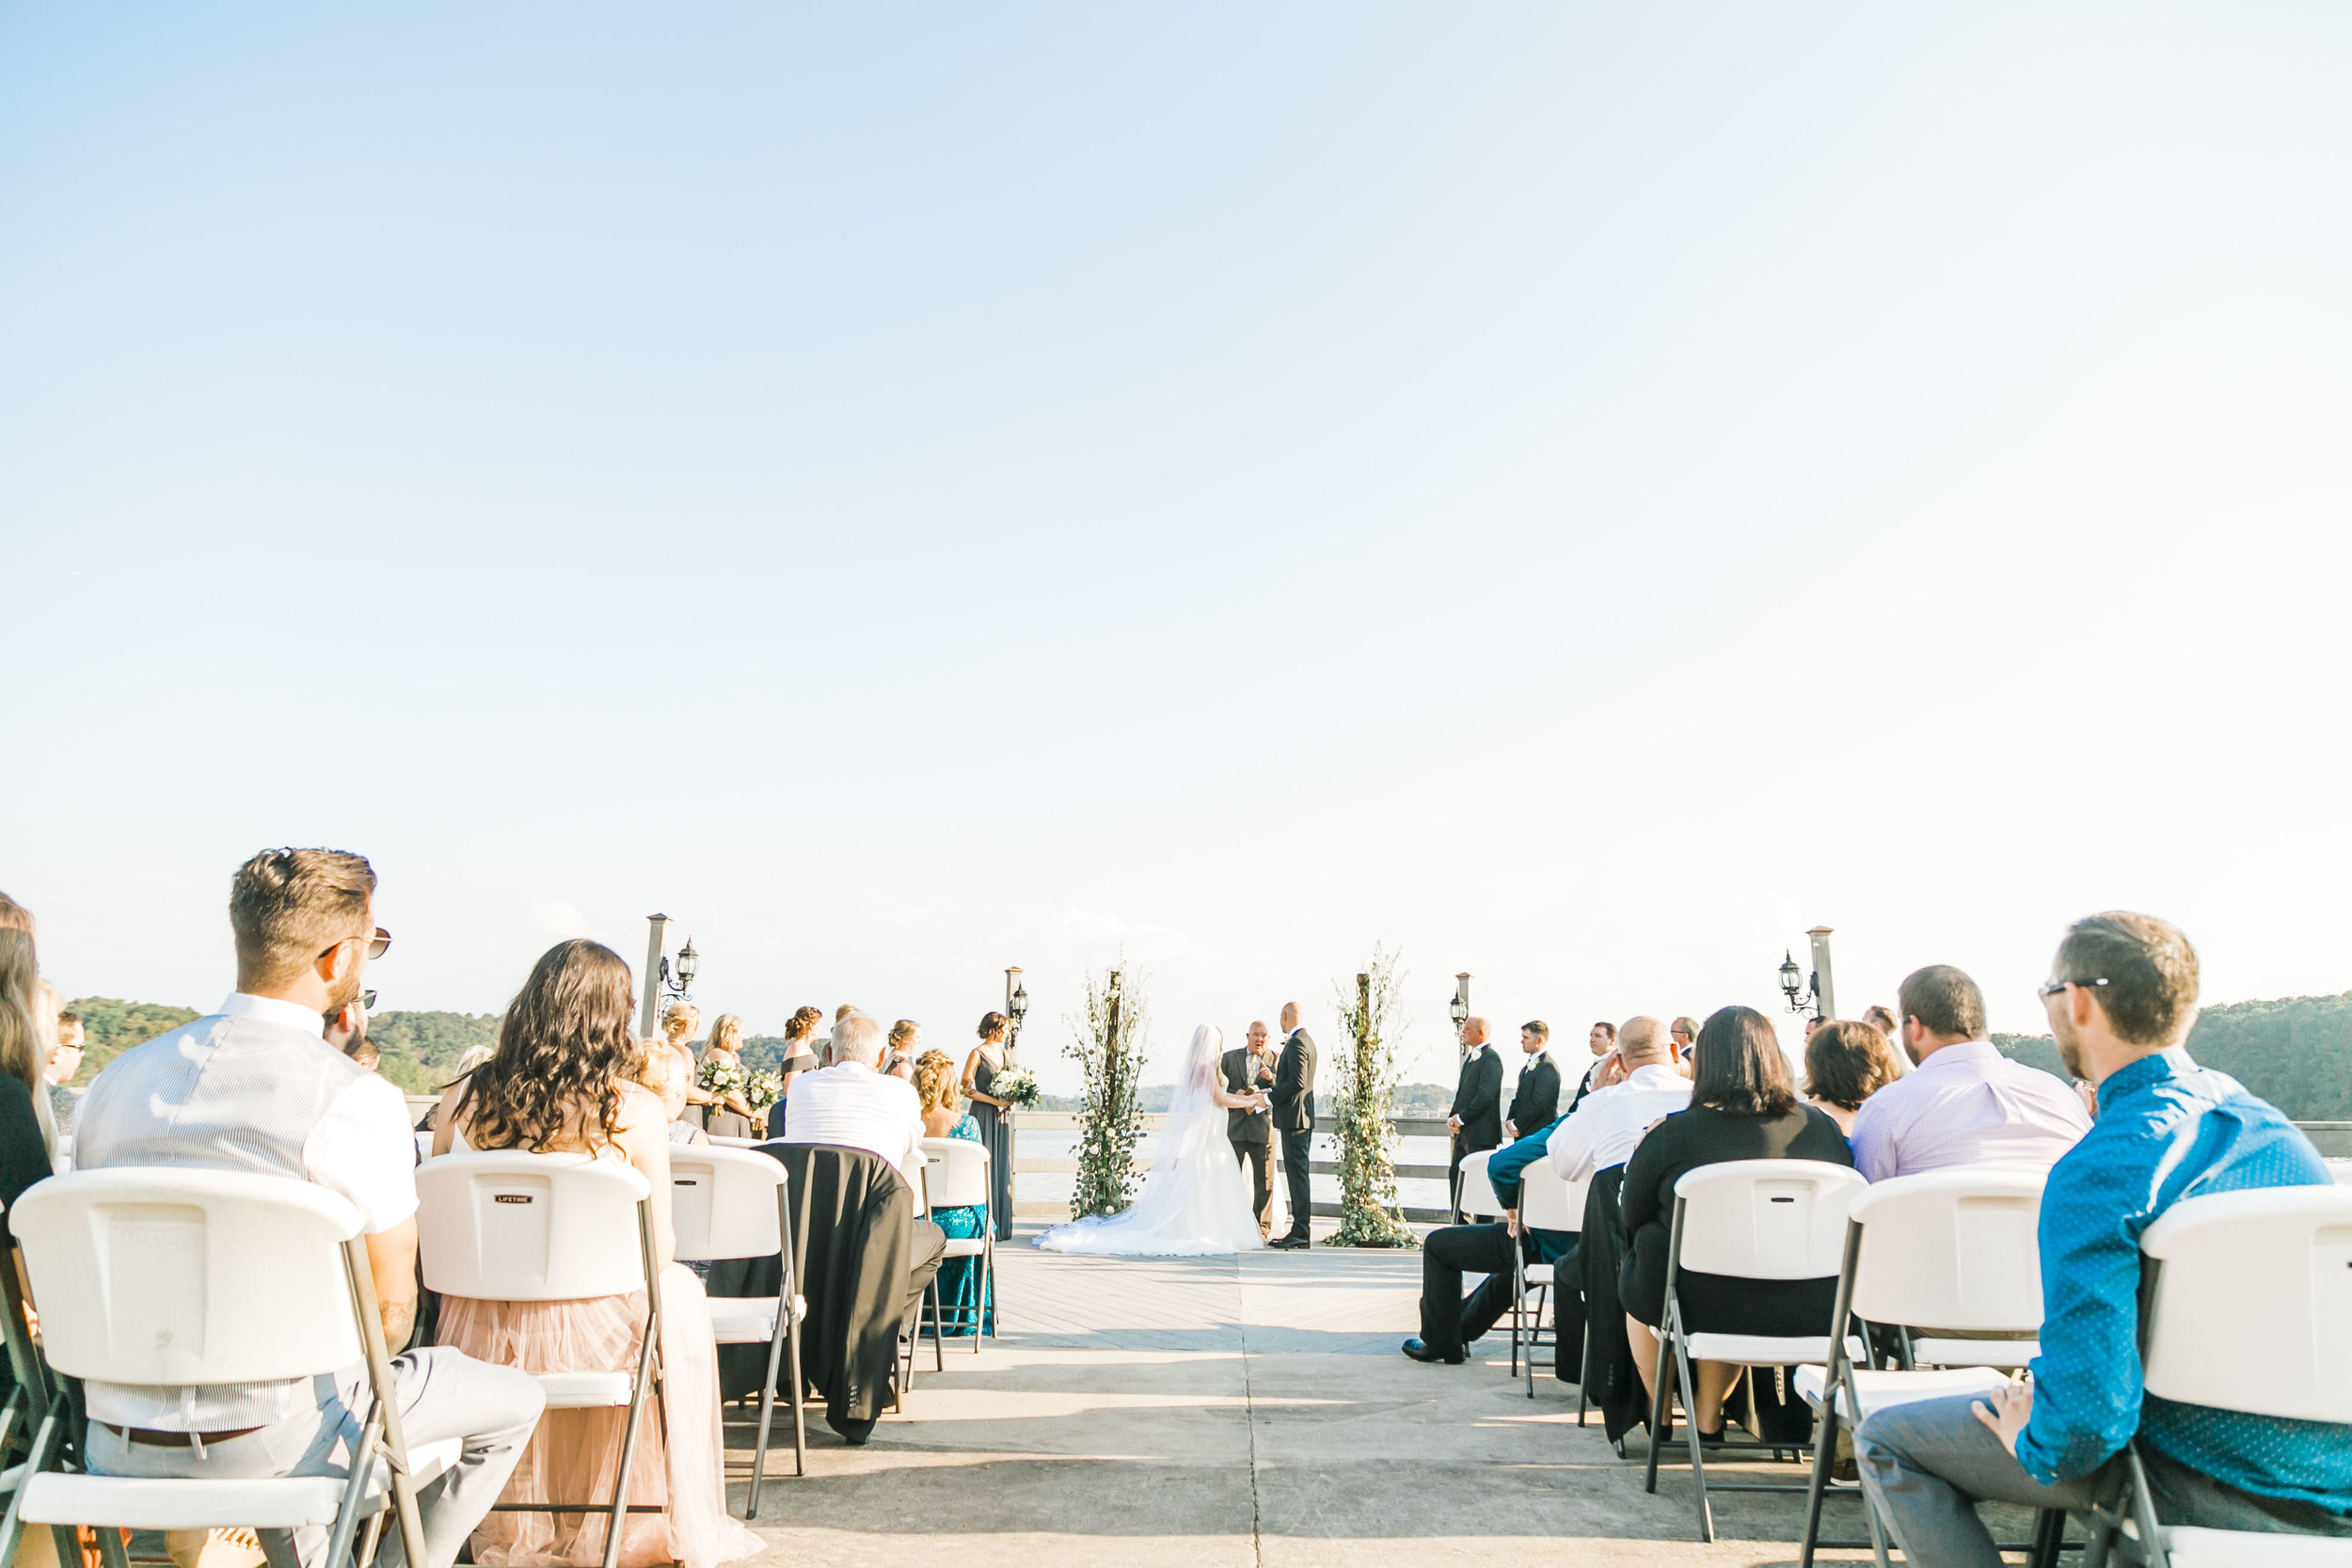 tellico village pier outdoor wedding